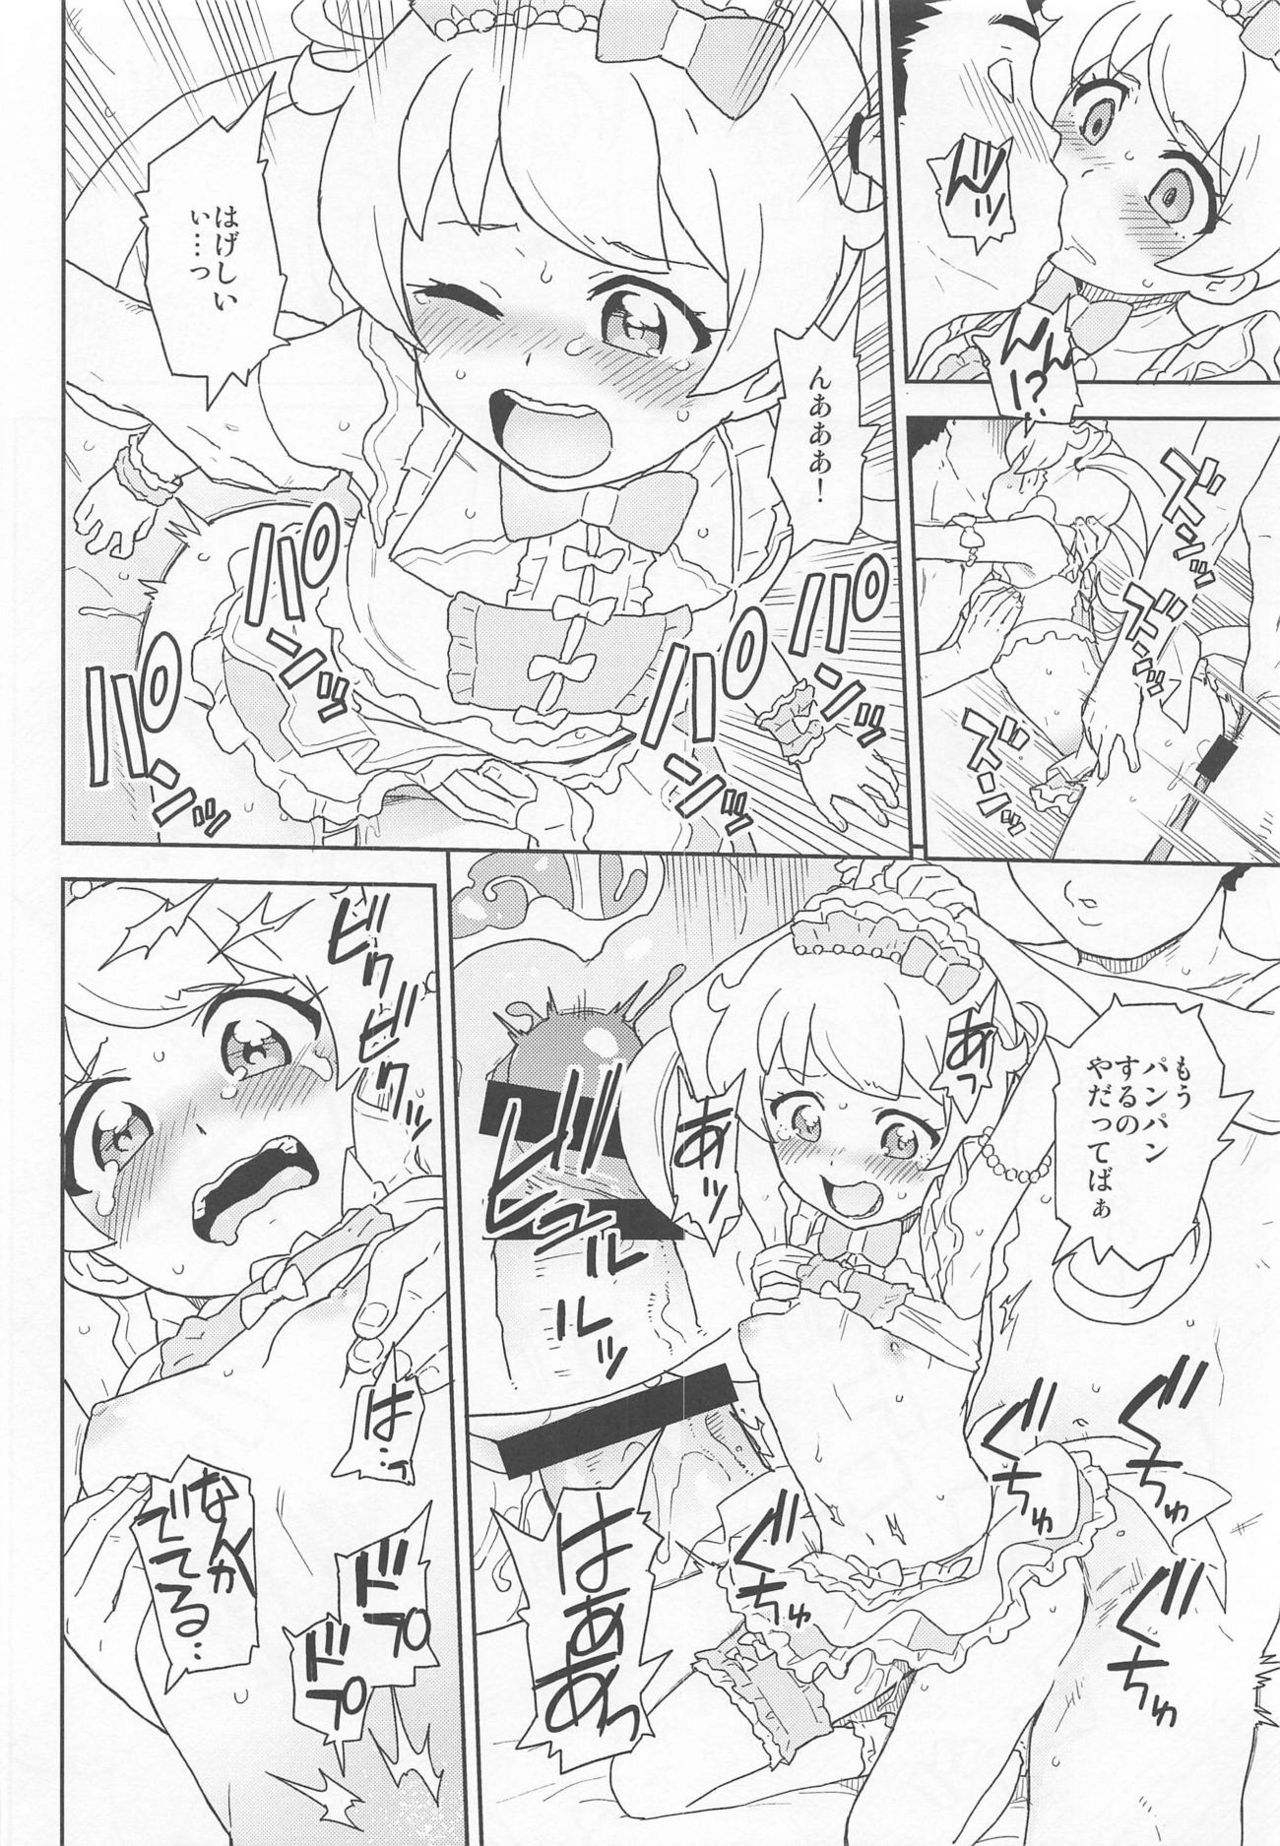 Mecha eli chan hentai doujinshi and manga фото 59